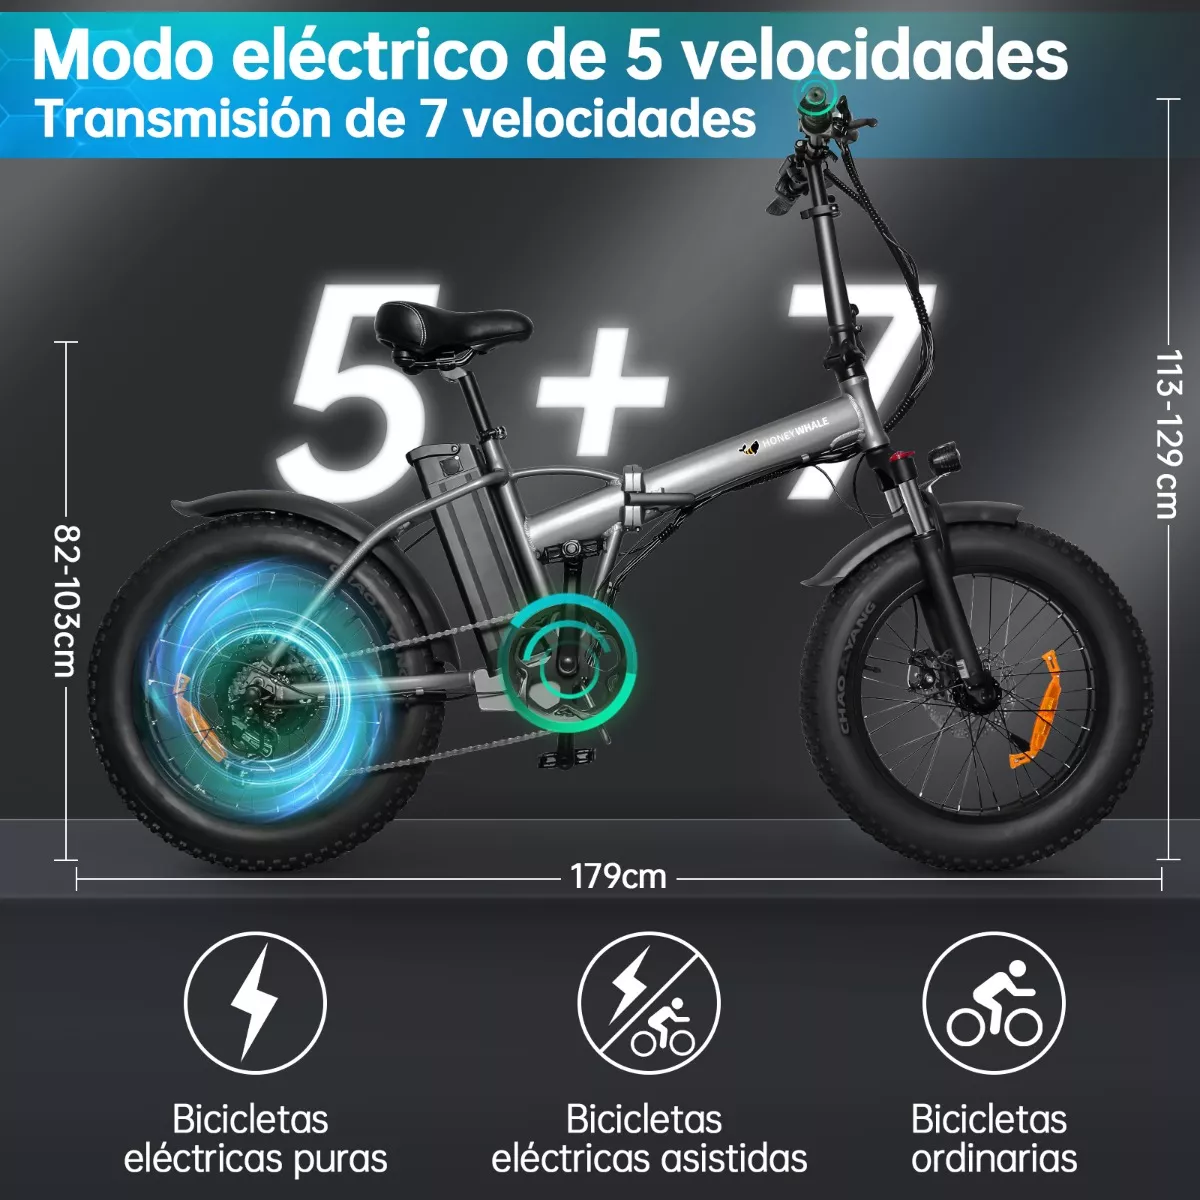 Segunda imagen para búsqueda de motor electrico para bicicleta